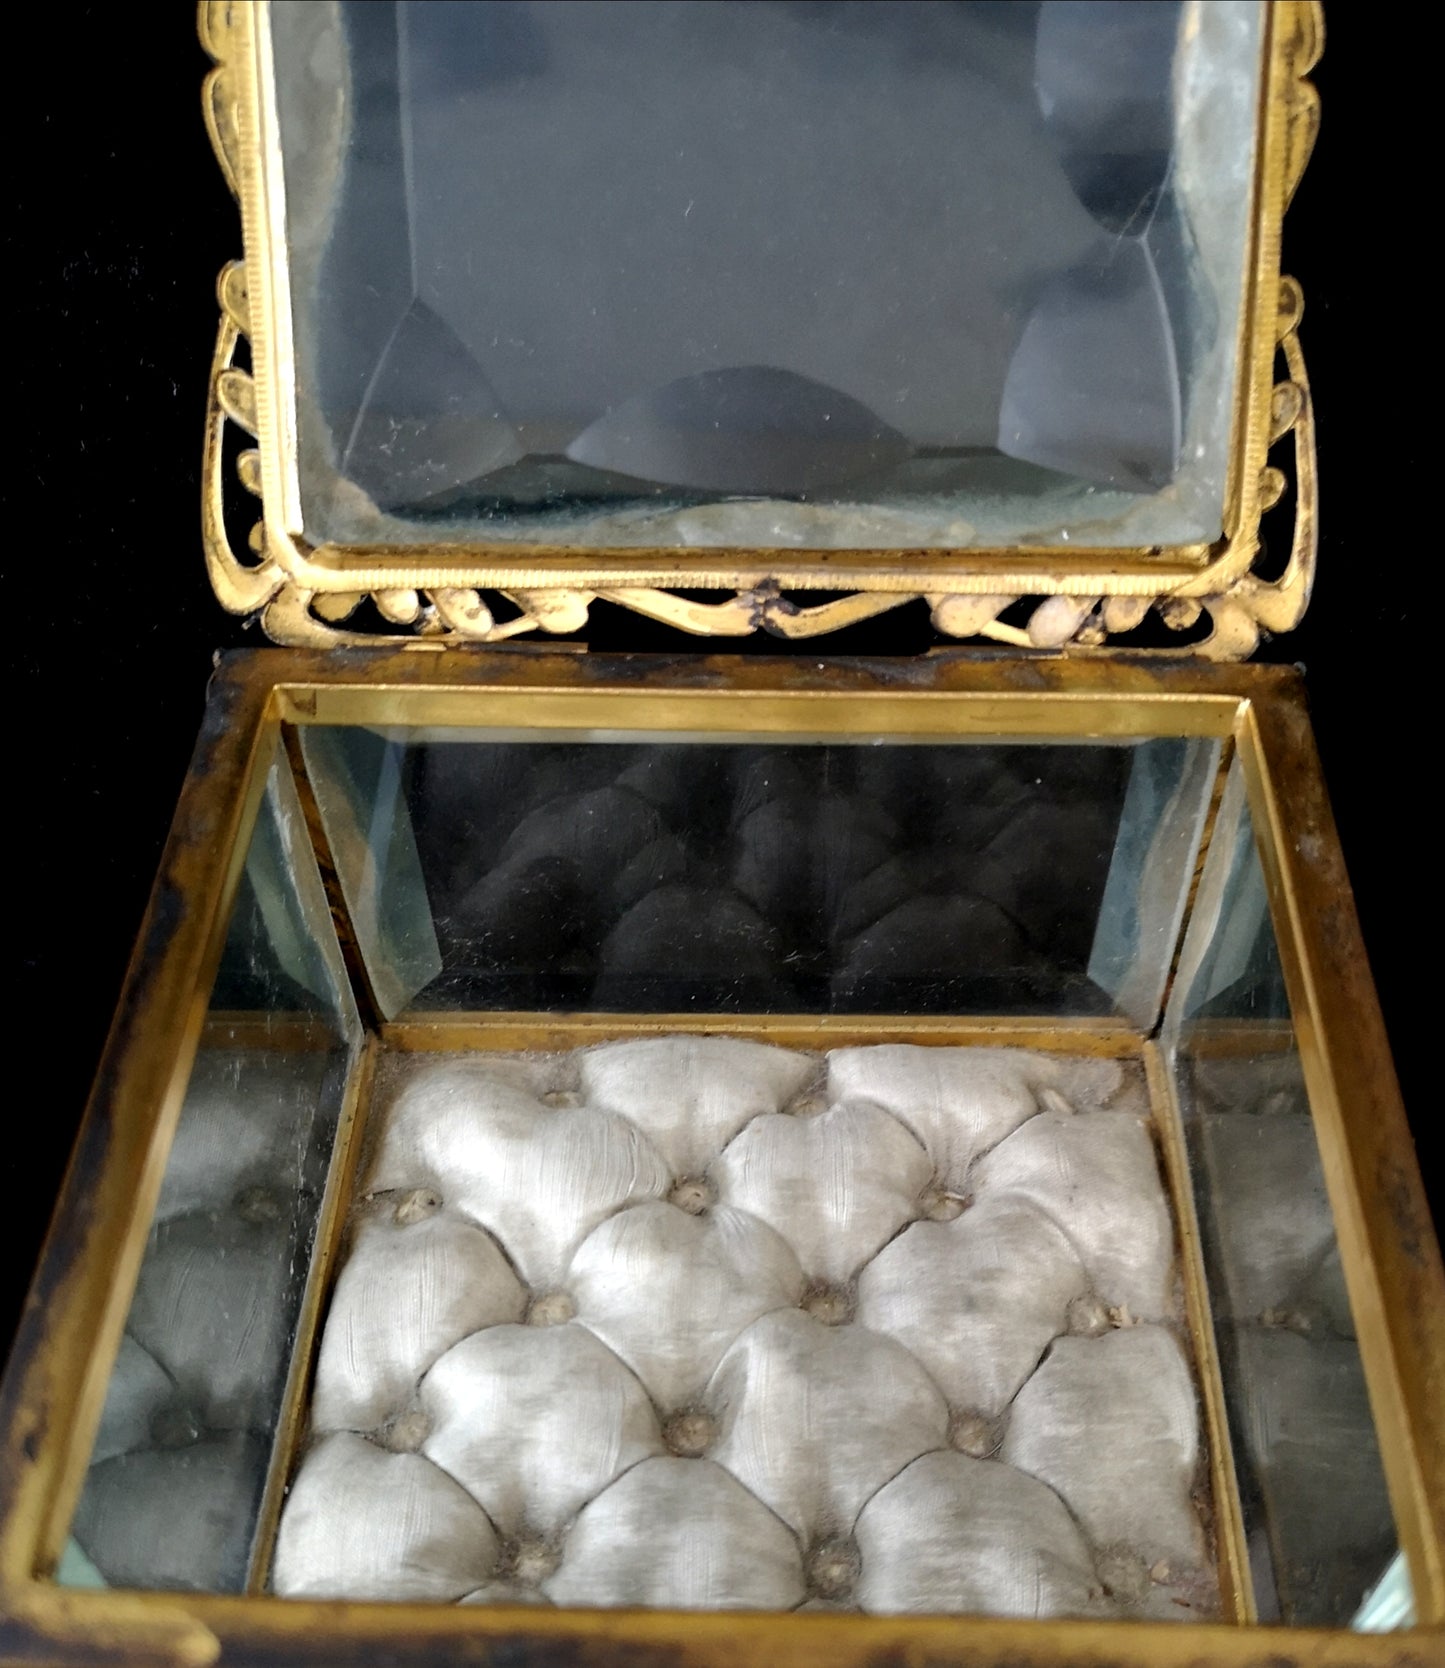 Antique French jewellery casket, ormolu box